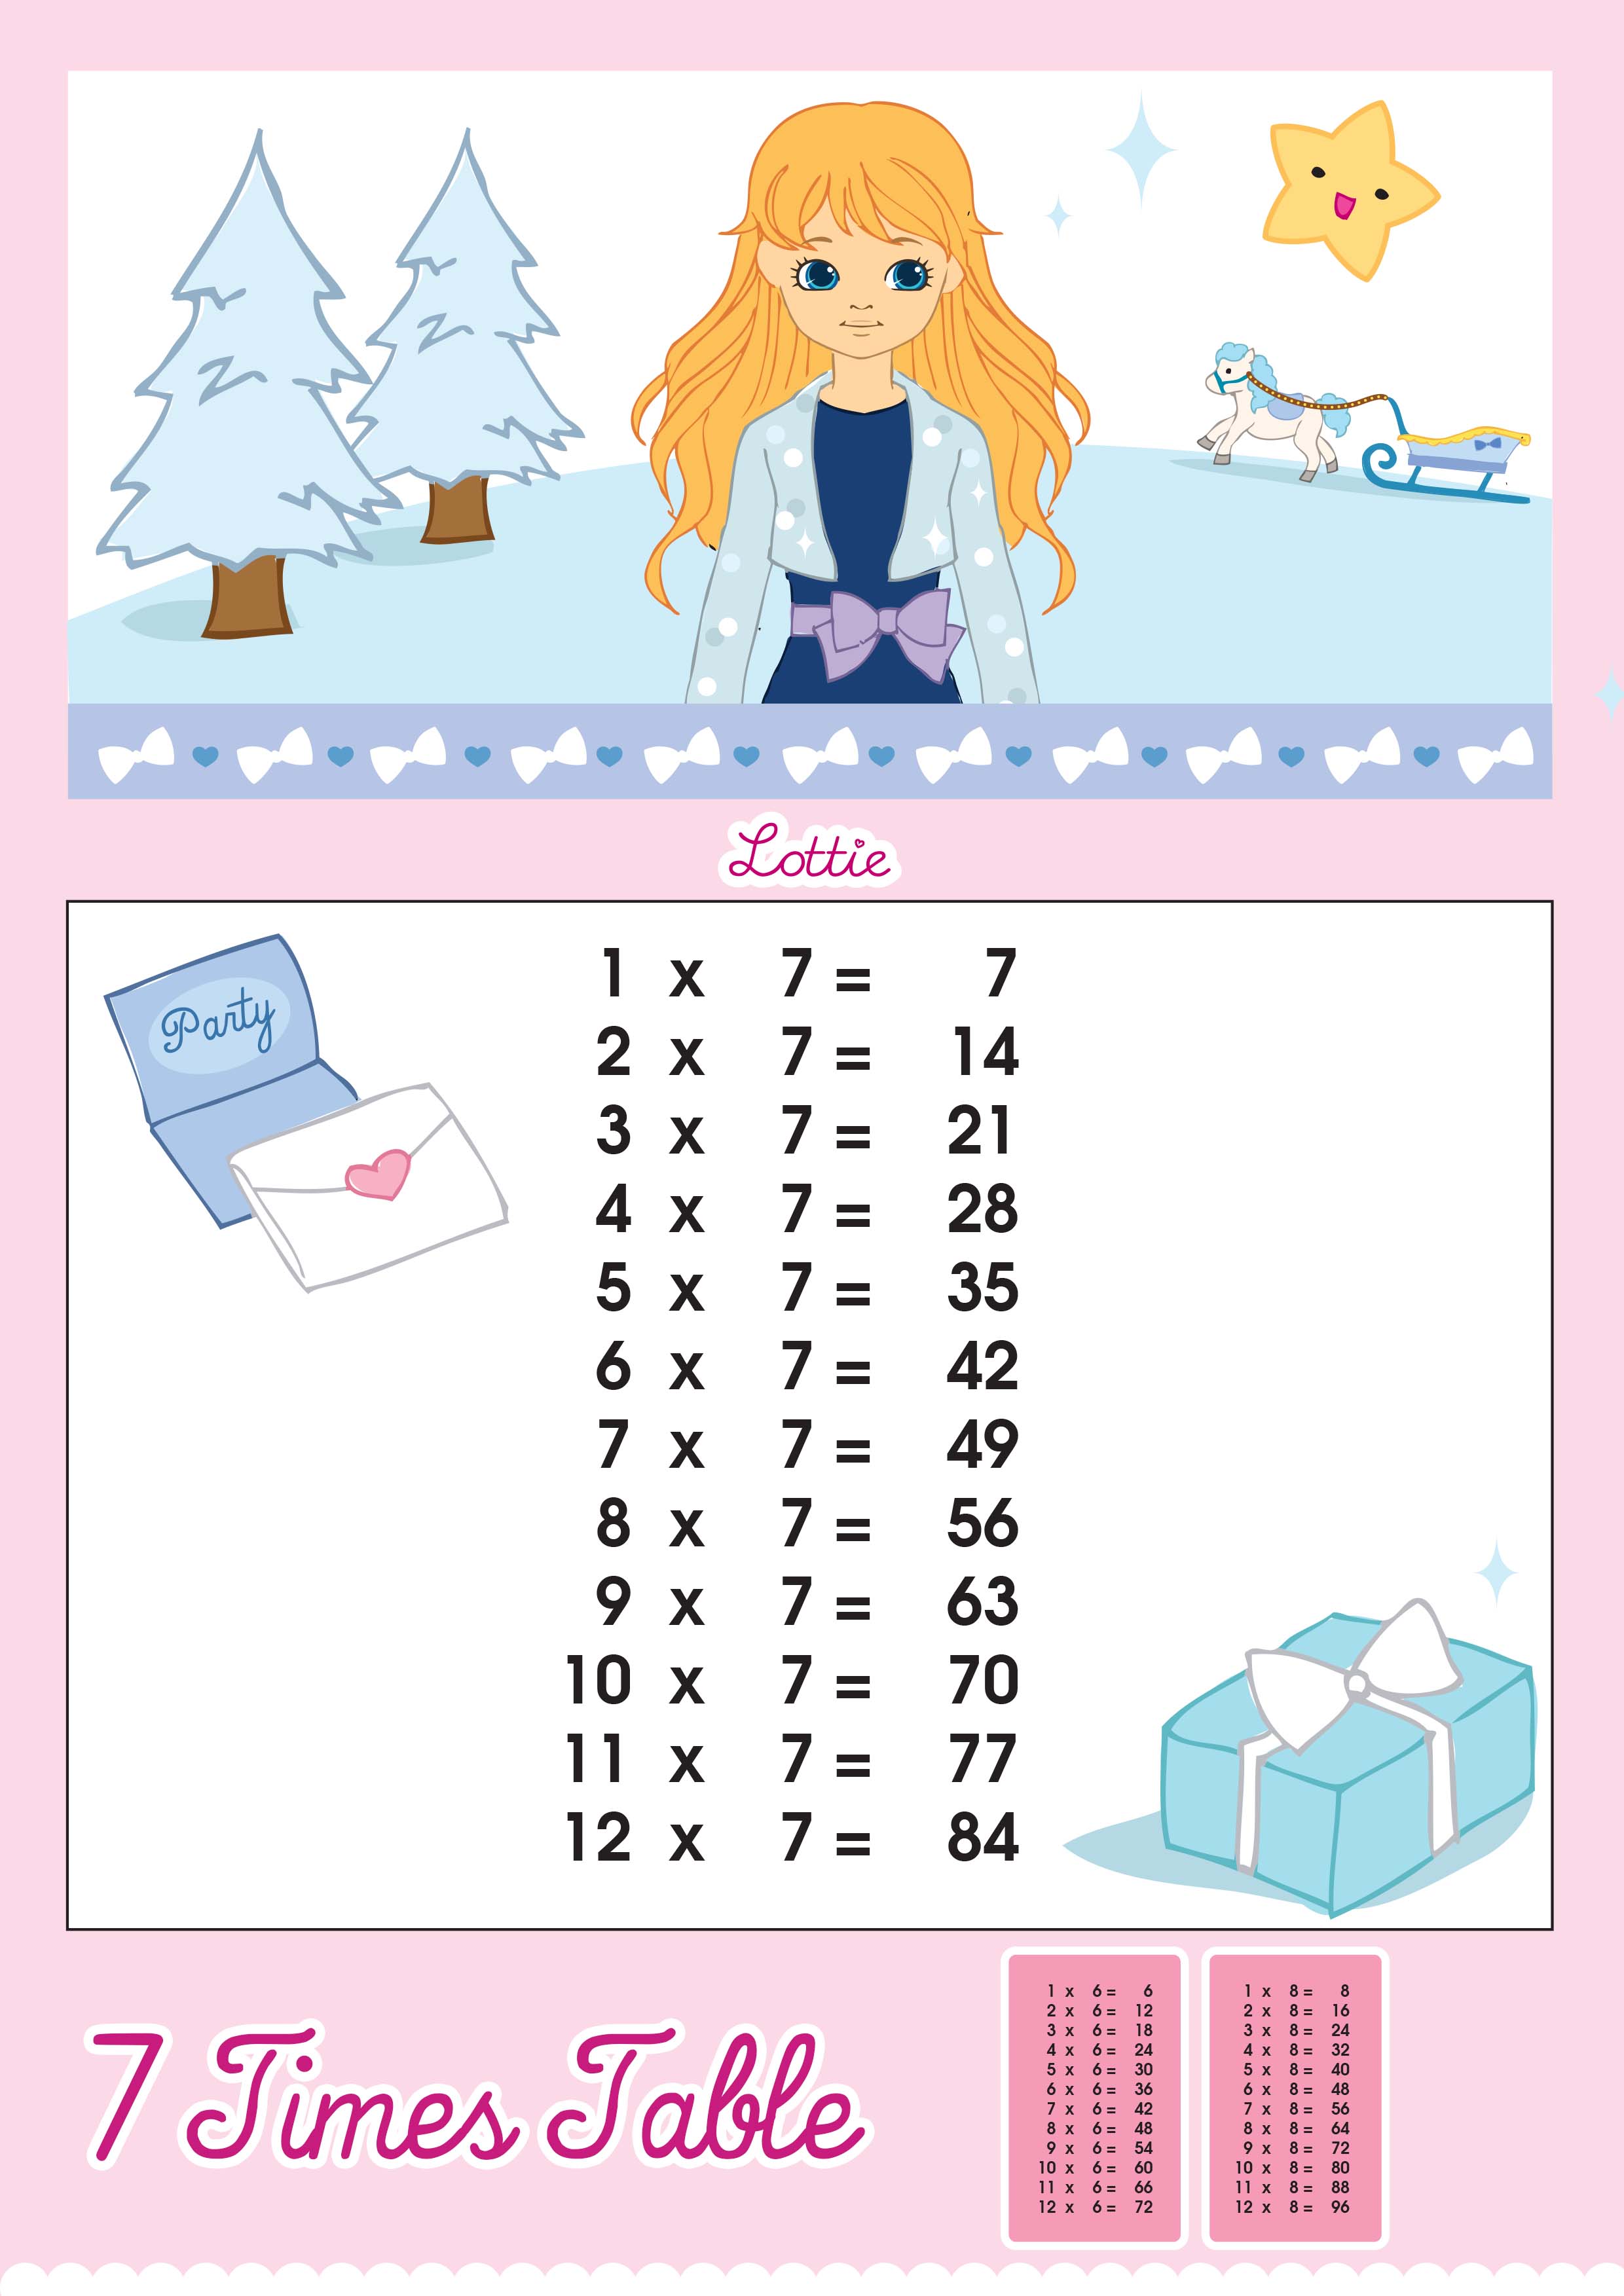 7 Times Table Multiplication Chart – Lottie Dolls